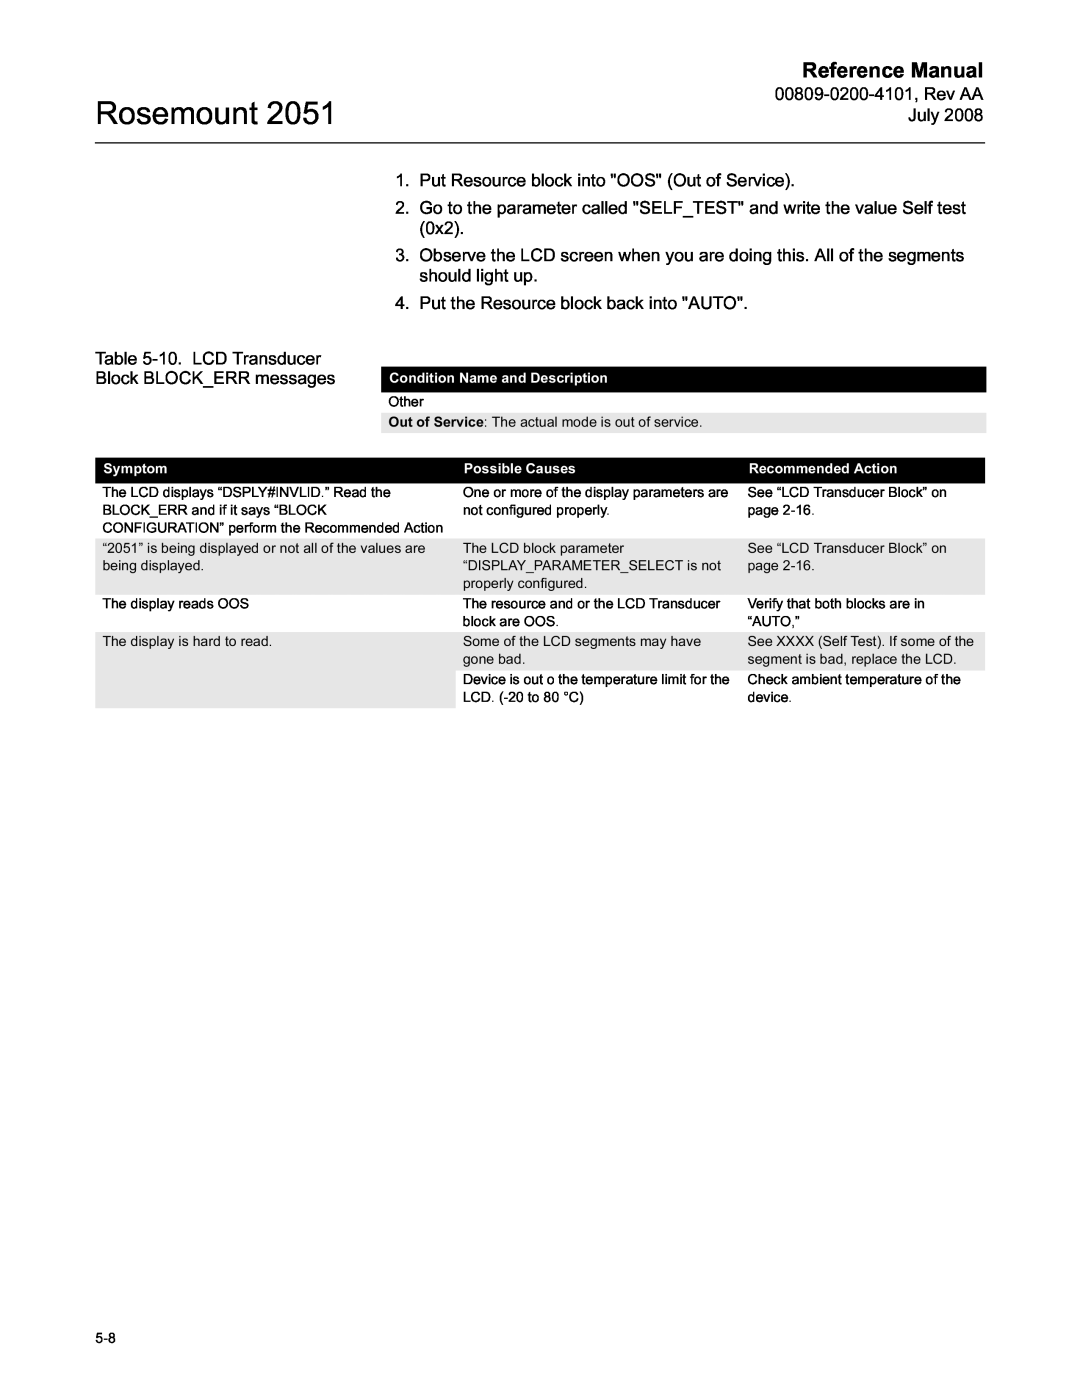 Emerson Process Management 2051 manual Rosemount, Reference Manual, 00809-0200-4101,Rev AA July, 10.LCD Transducer 